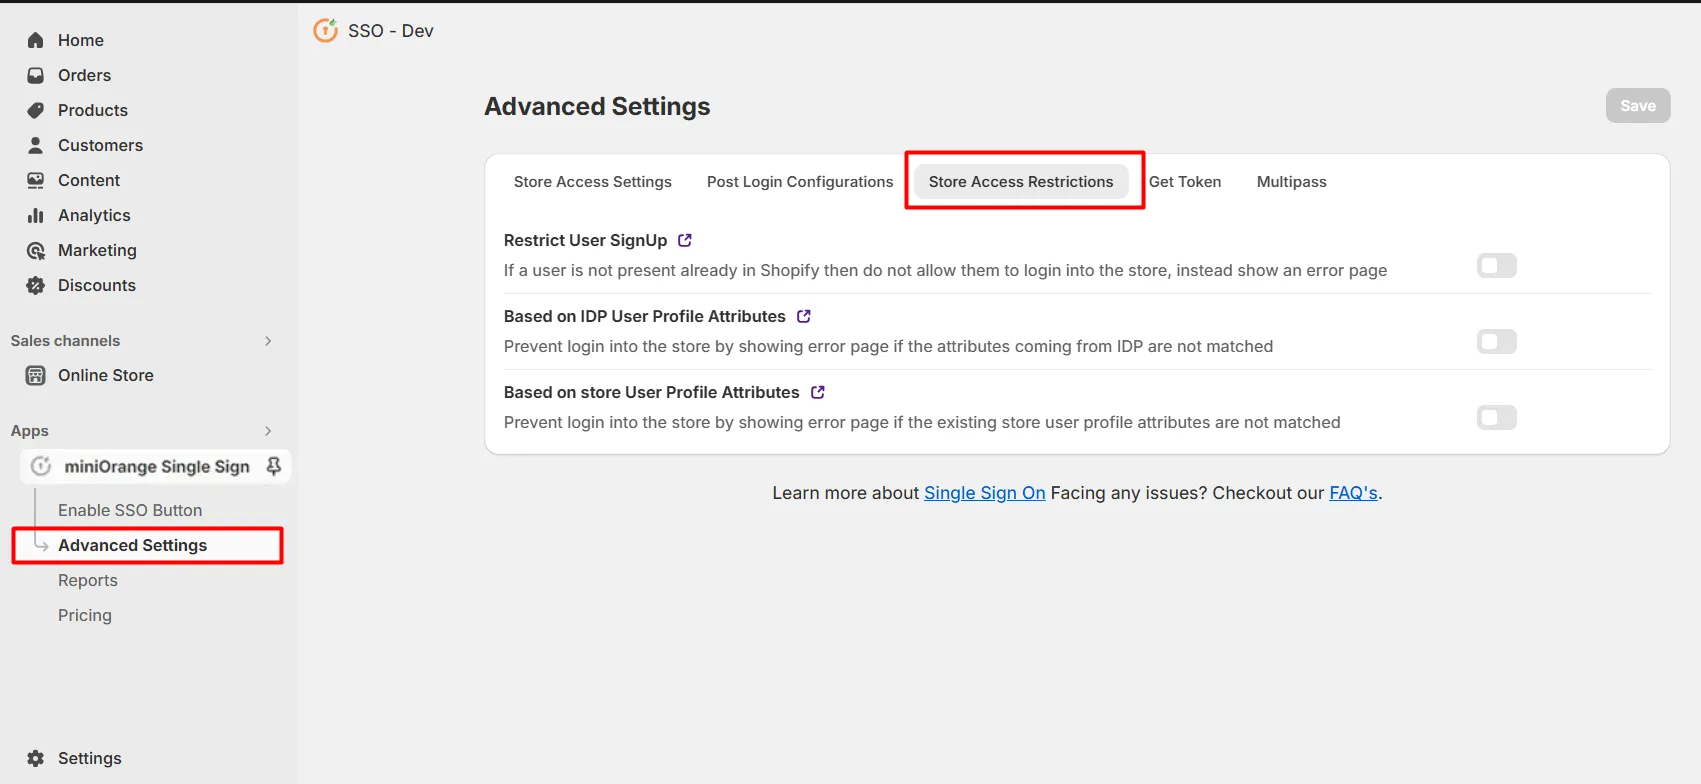 Shopify SSO Application - Advance Settings